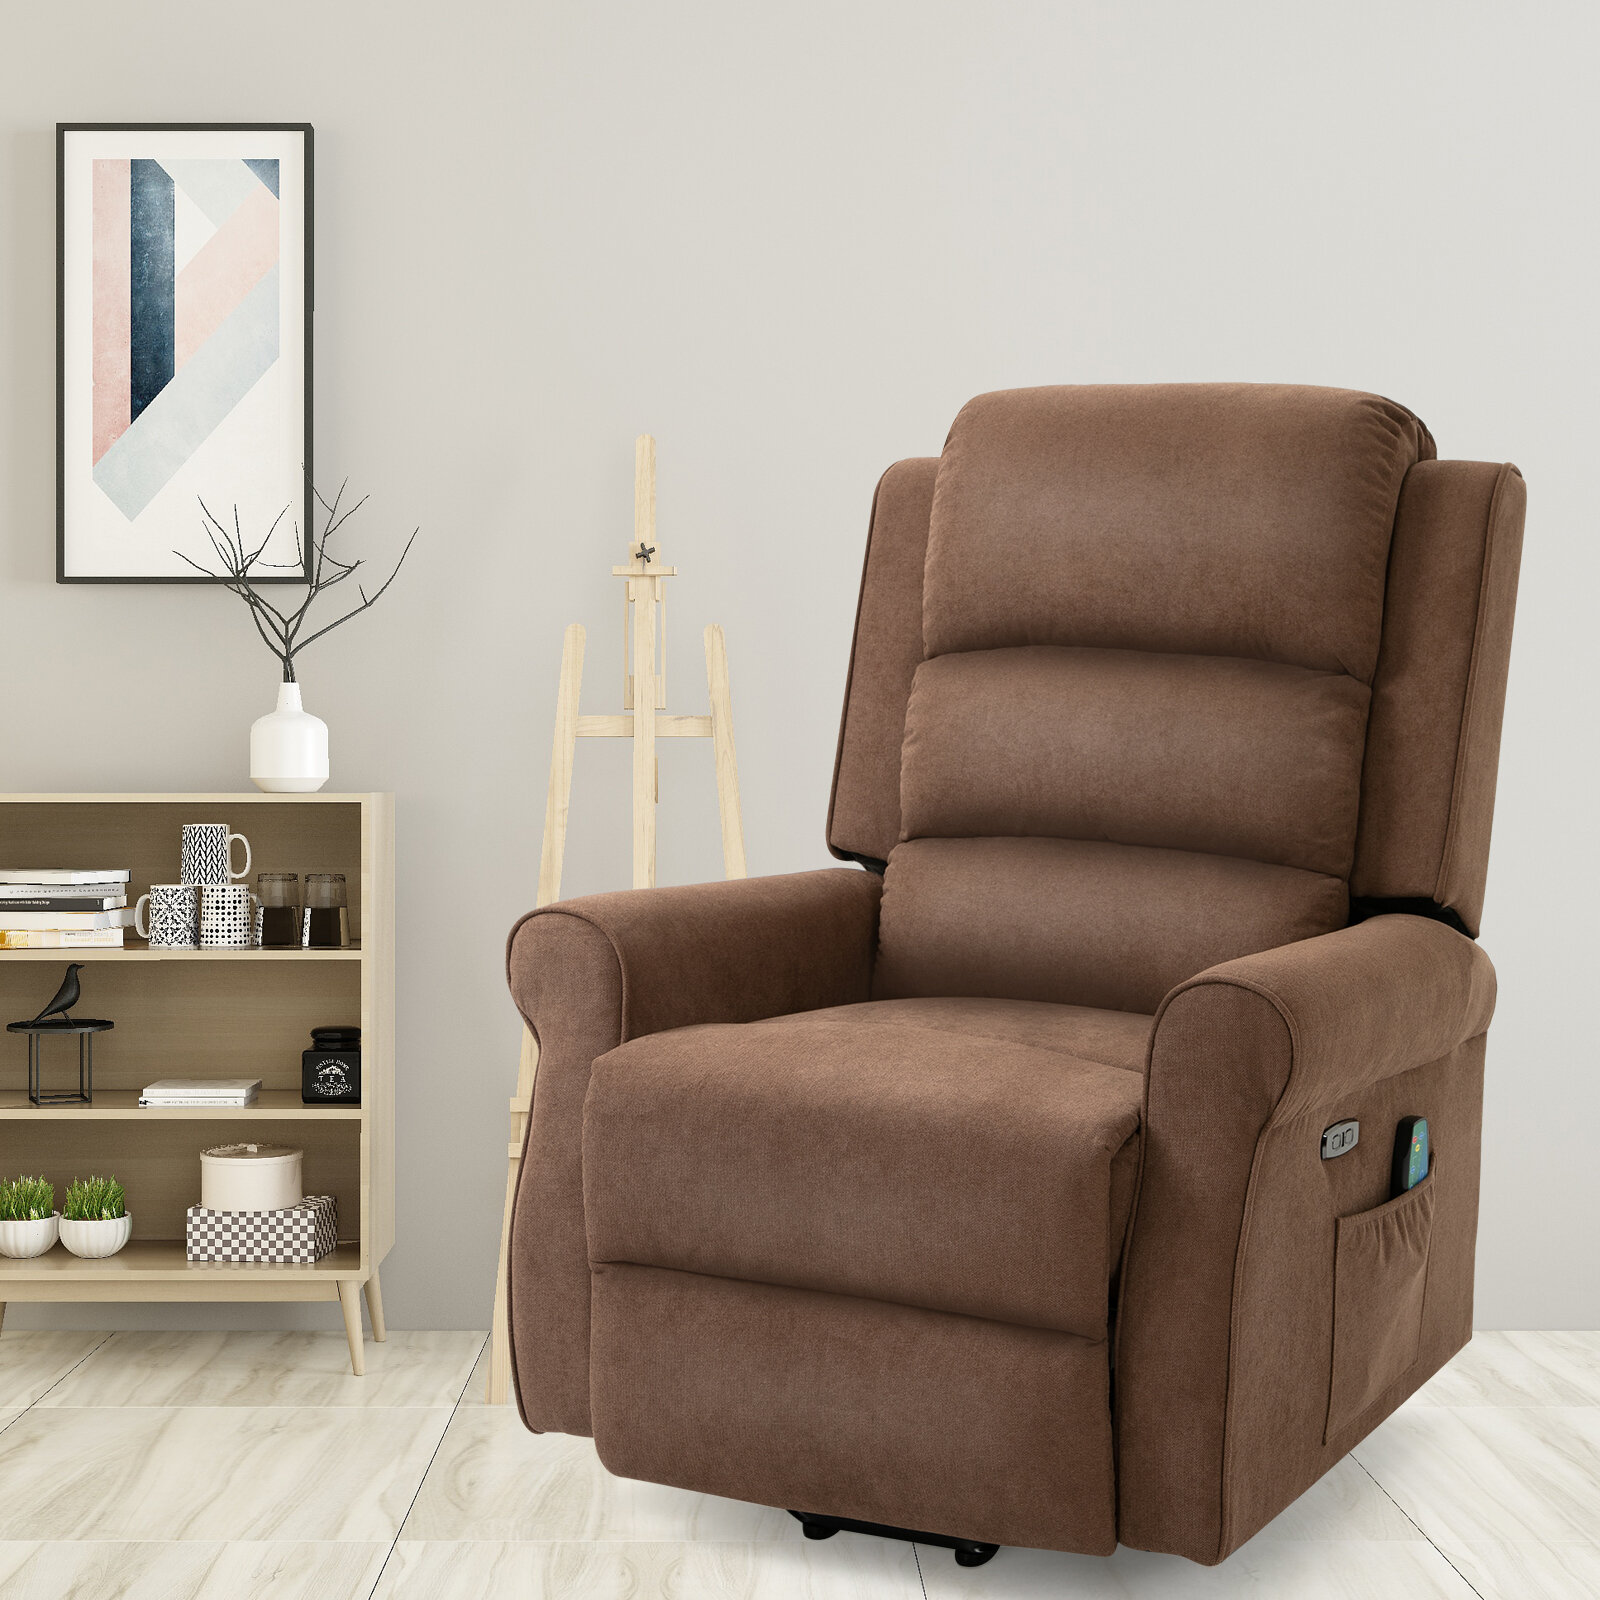 Power Lift Recliner Chair Overstuffed Cozy Single Sofa Living Room for Elderly 